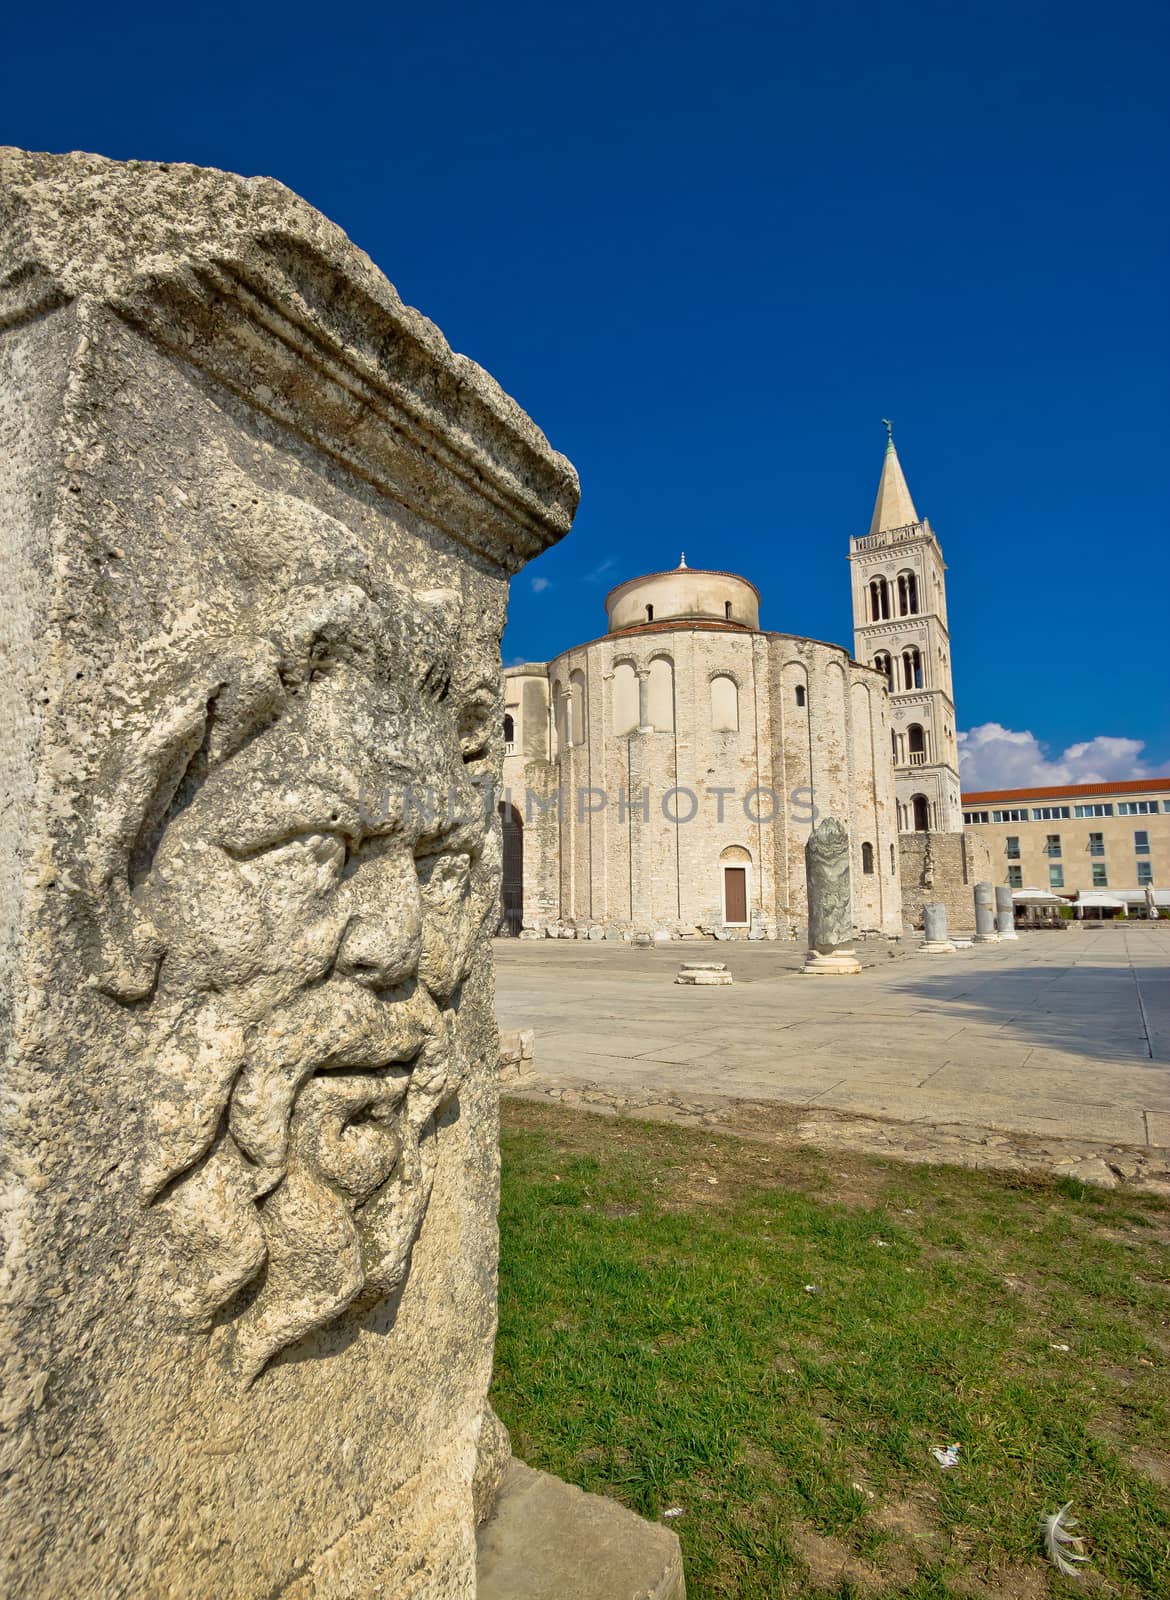 Zadar old roman square artefacts and cathedral vertical view, Dalmatia, Croatia